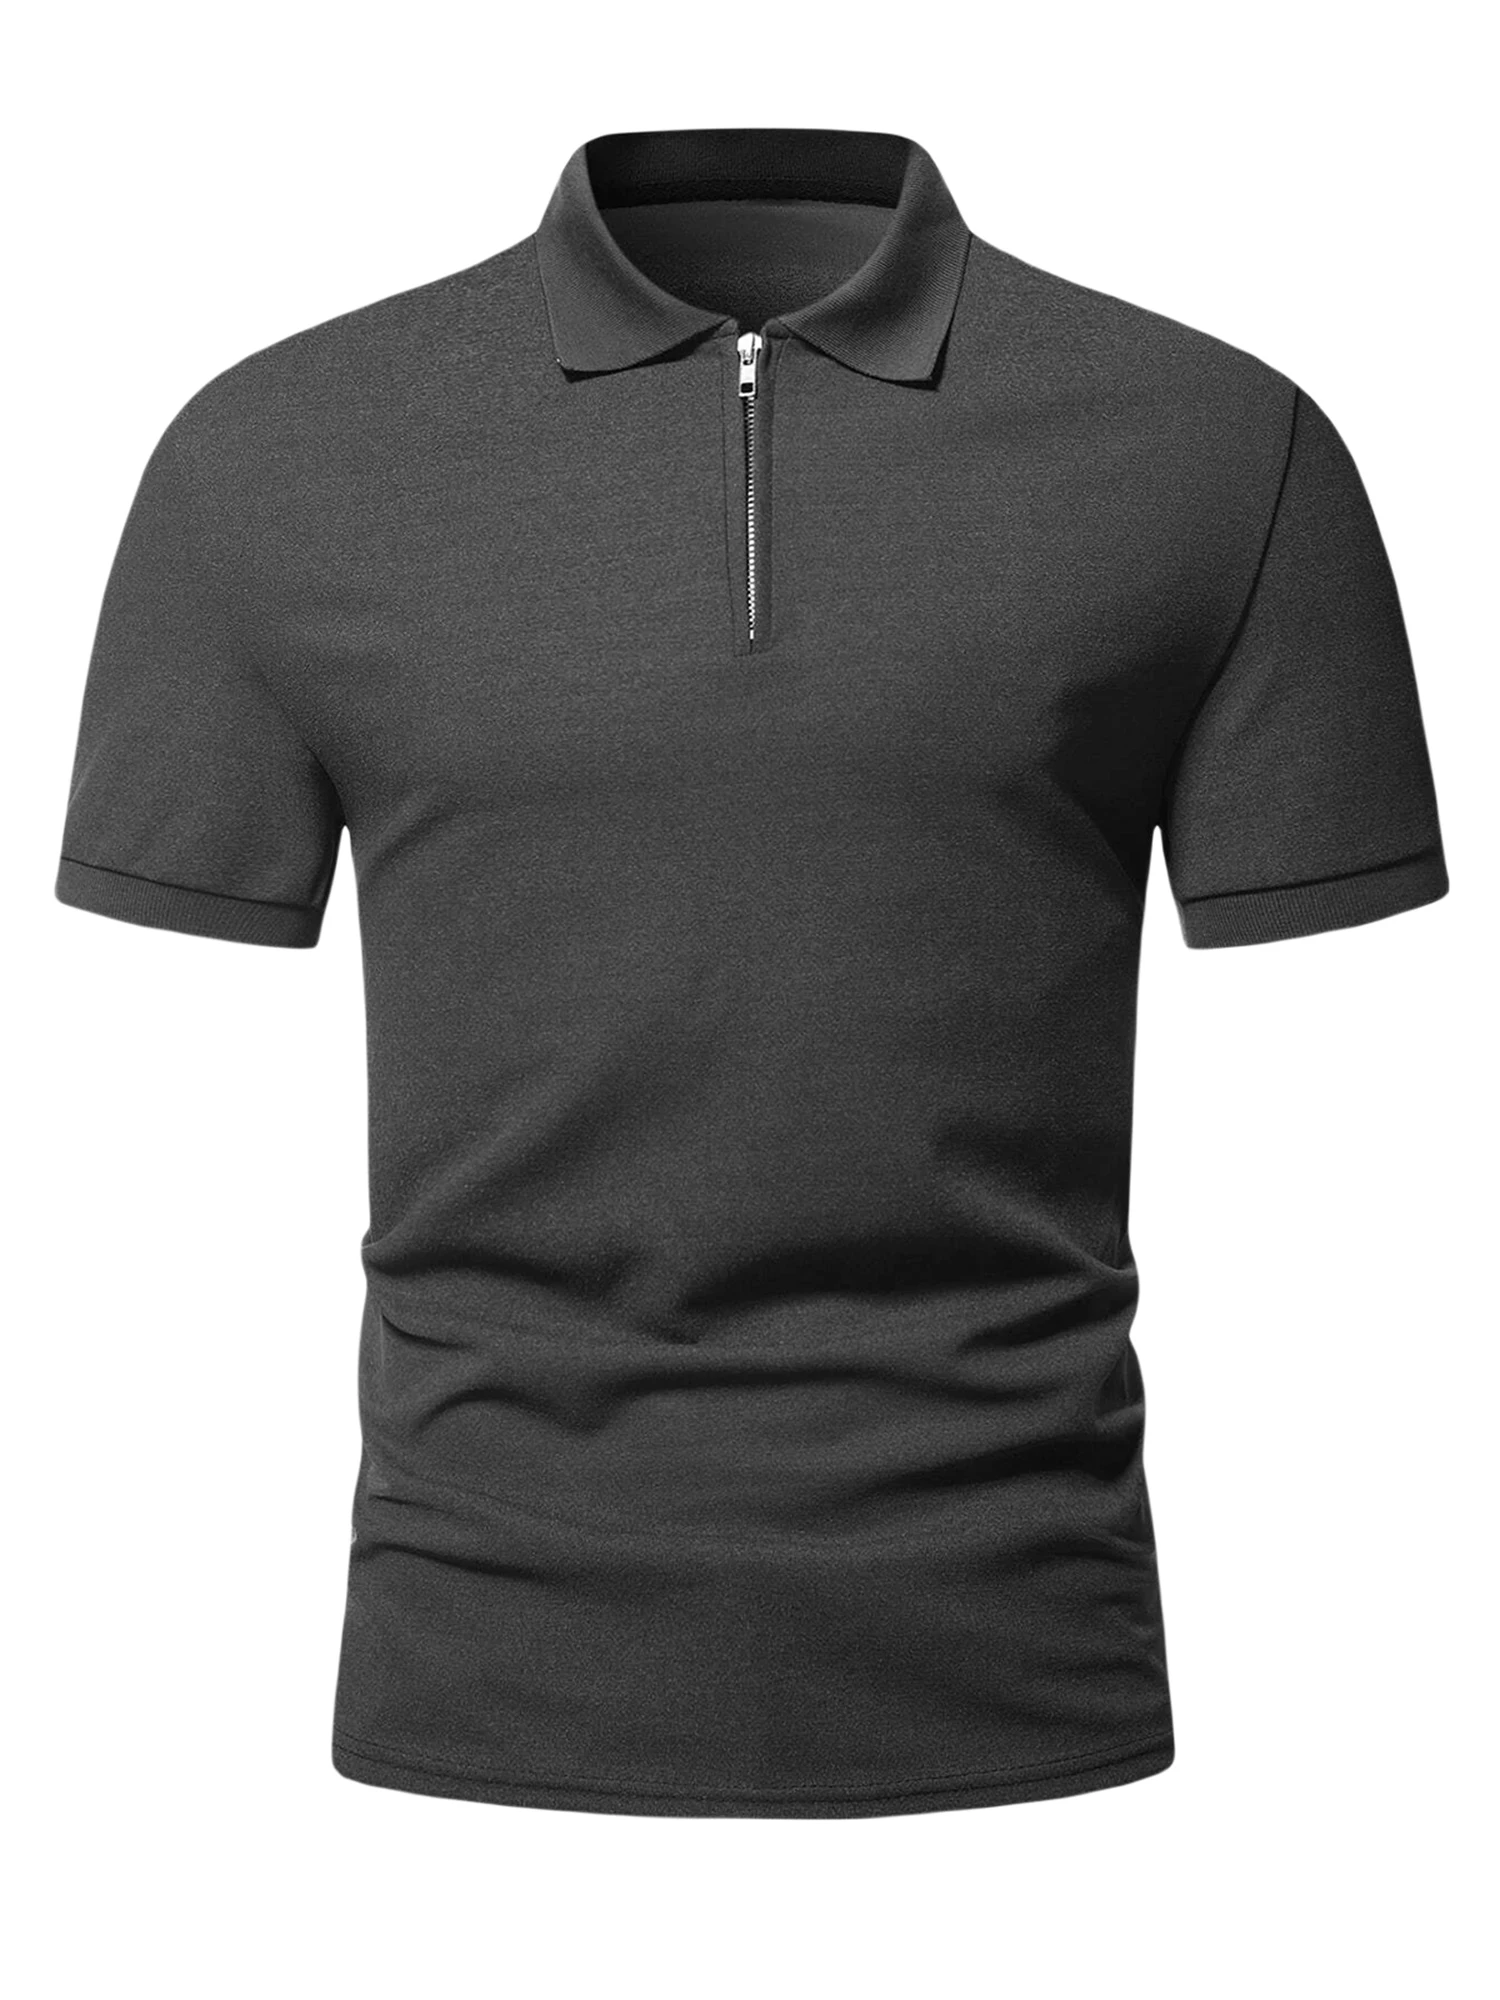 

Men s Long Sleeve Shirts Half-Zip Striped Pattern Regular Fit Mock Neck Classic Designed Cotton Tops